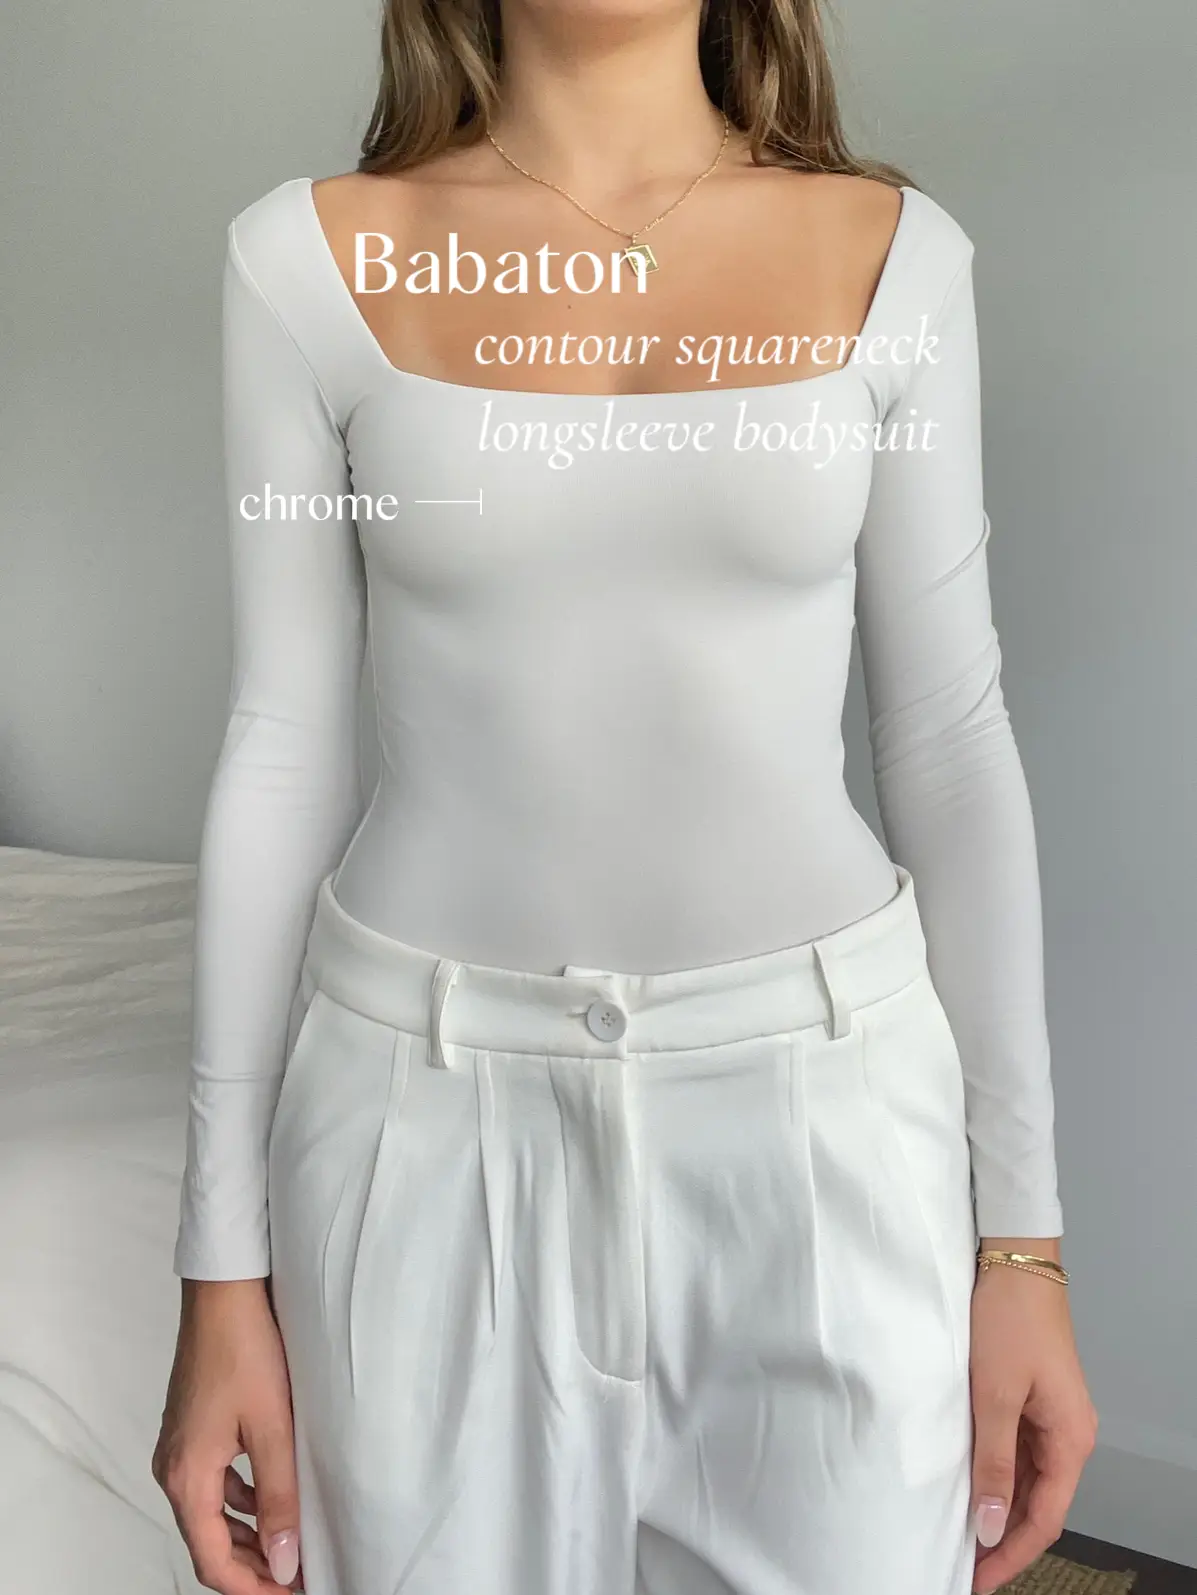 Babaton Contour Longsleeve Bodysuit  Body suit outfits, Uni outfits,  Clothes